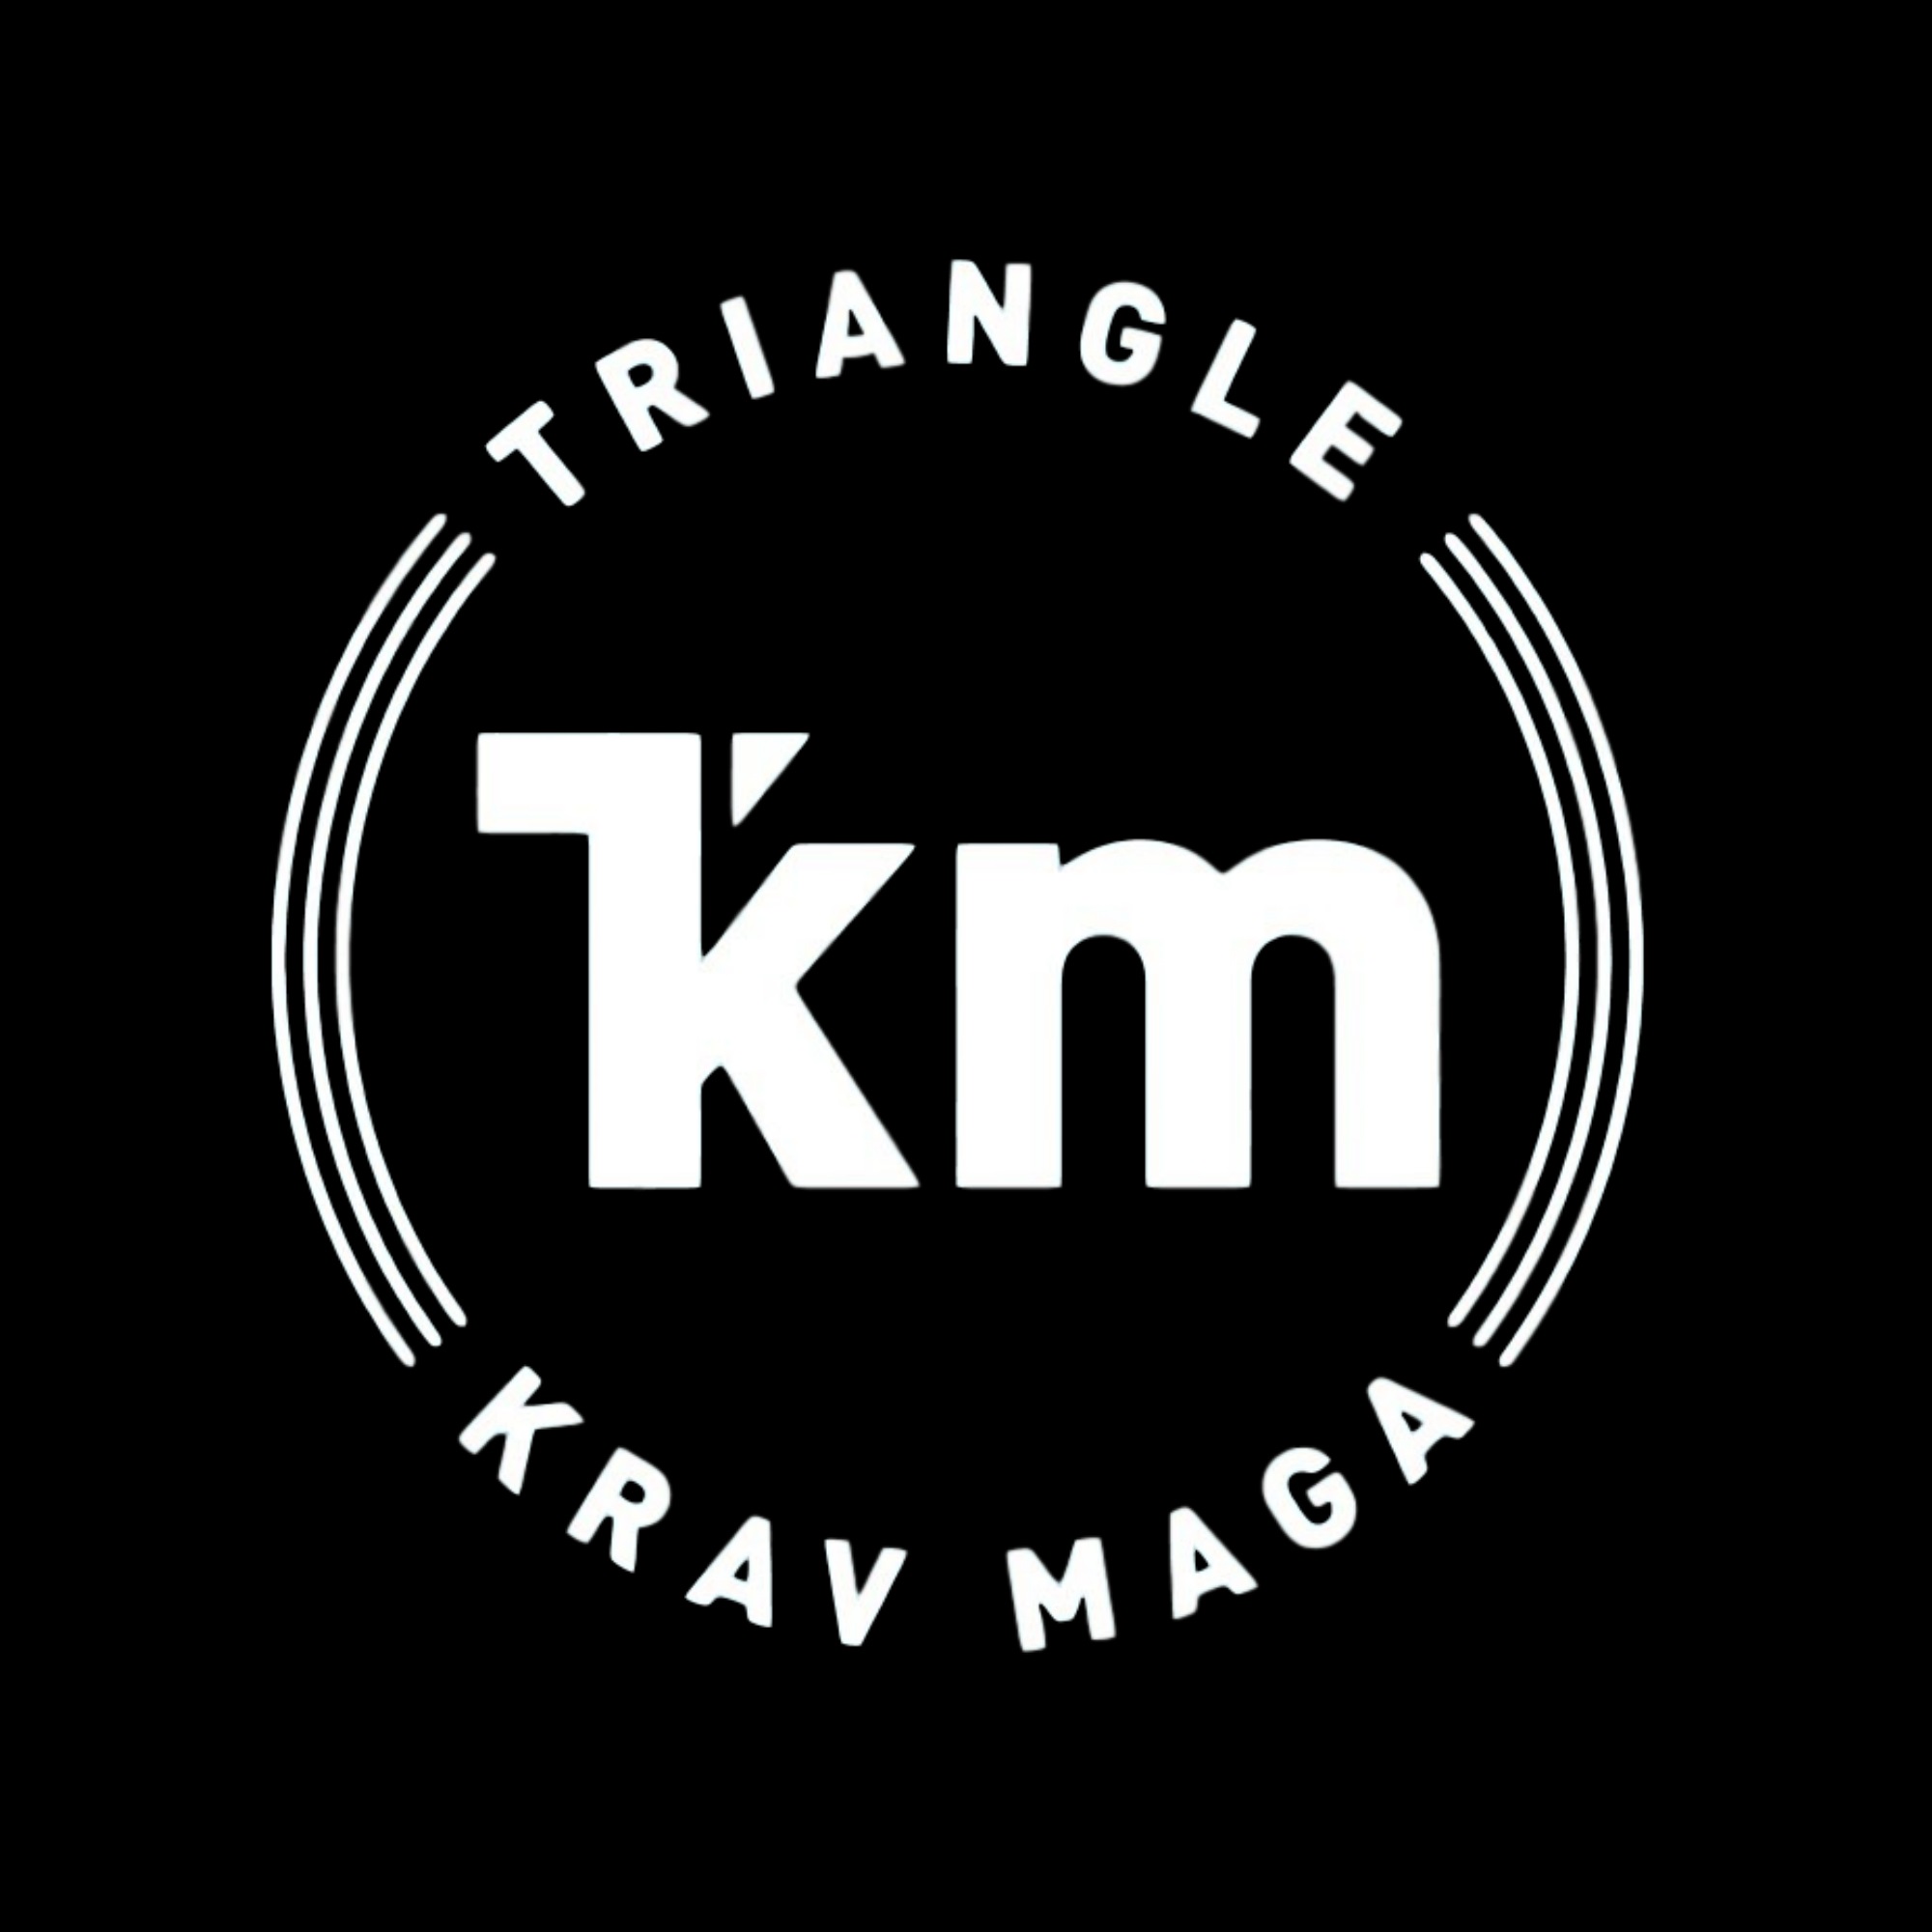 Triangle Krav Maga logo